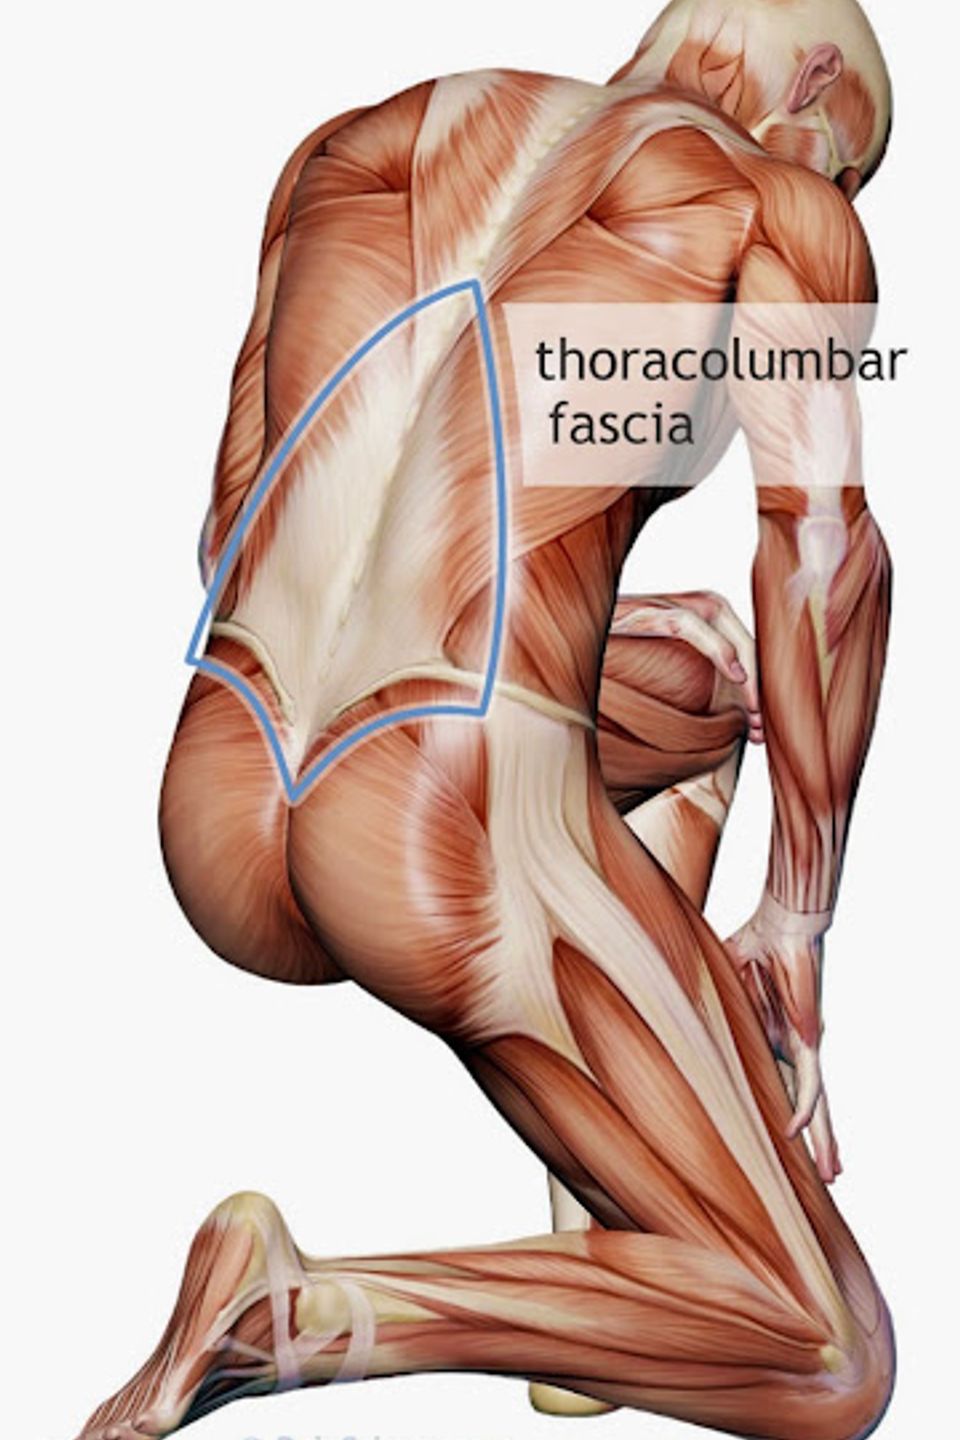 Thoracolumbar fascia xl